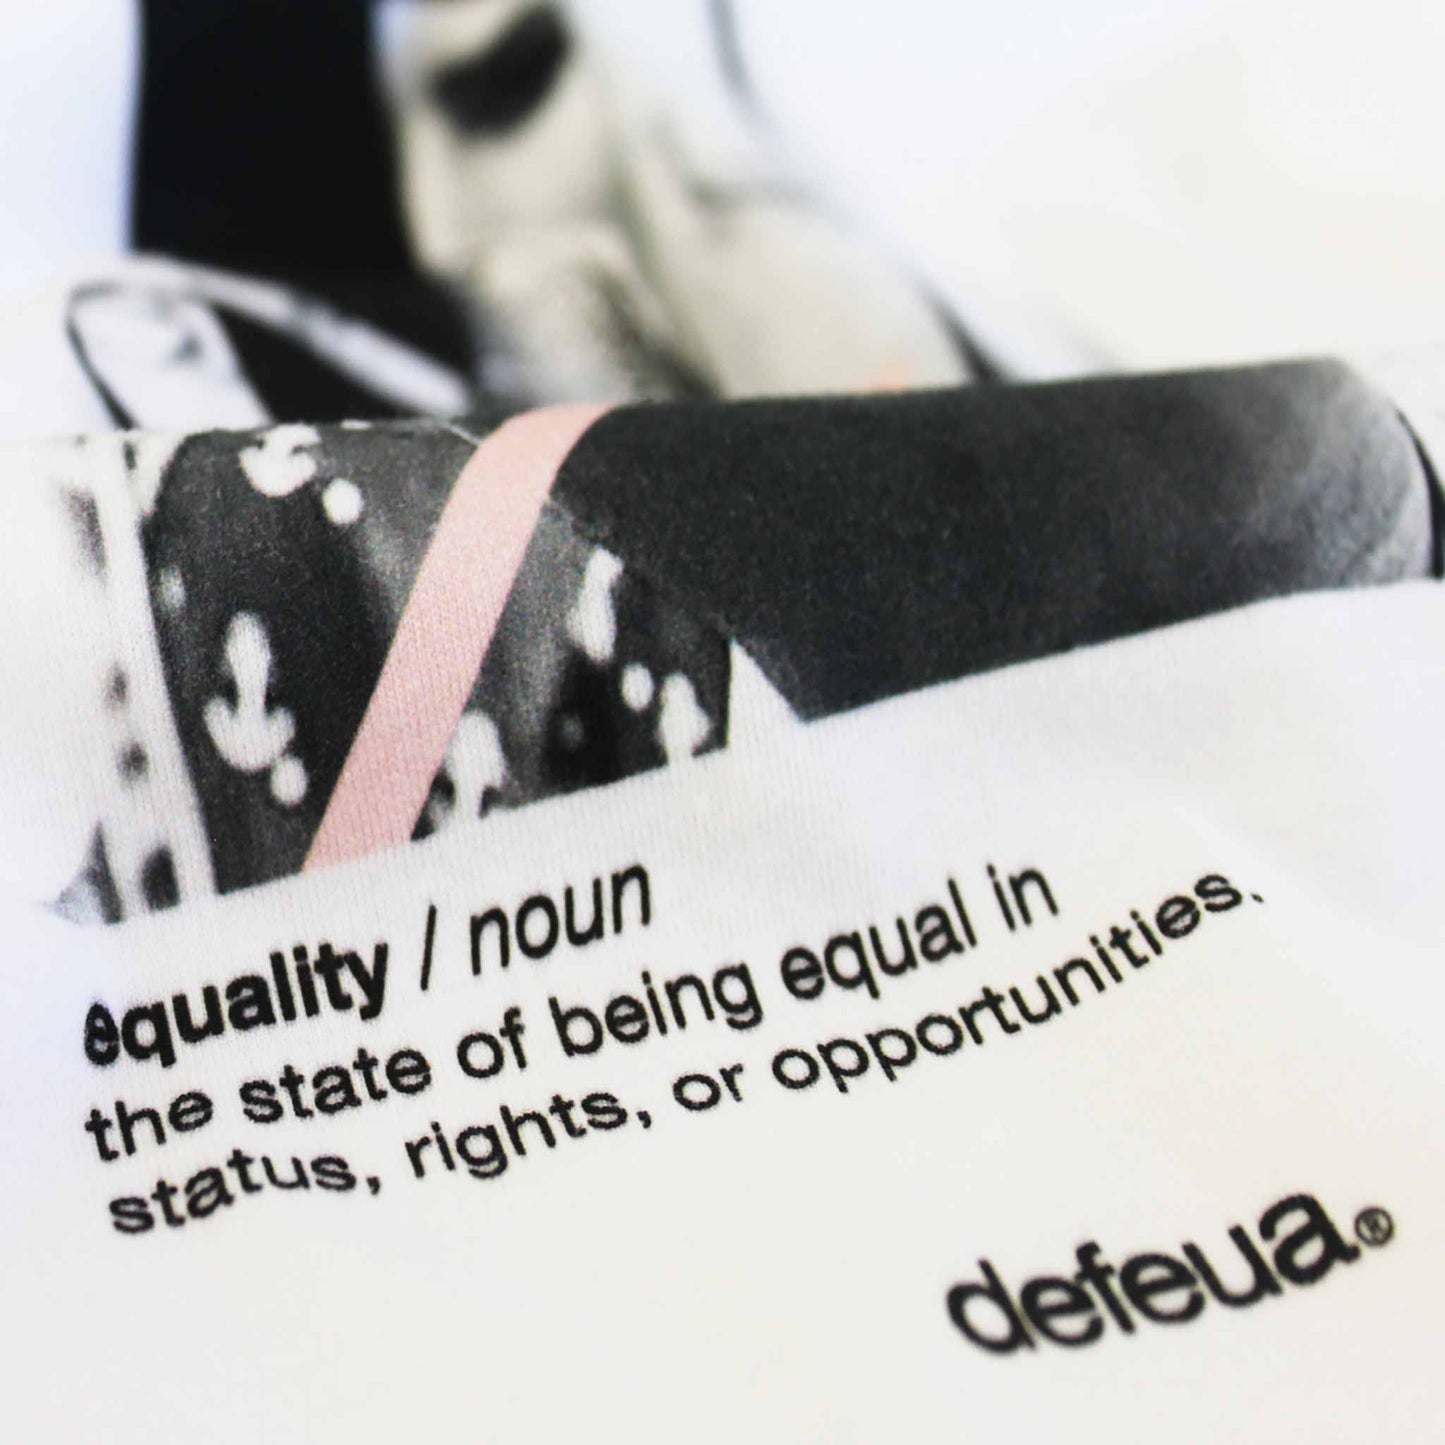 Defeua® WHY tshirt bianca donna in cotone biologico sulla gender equality